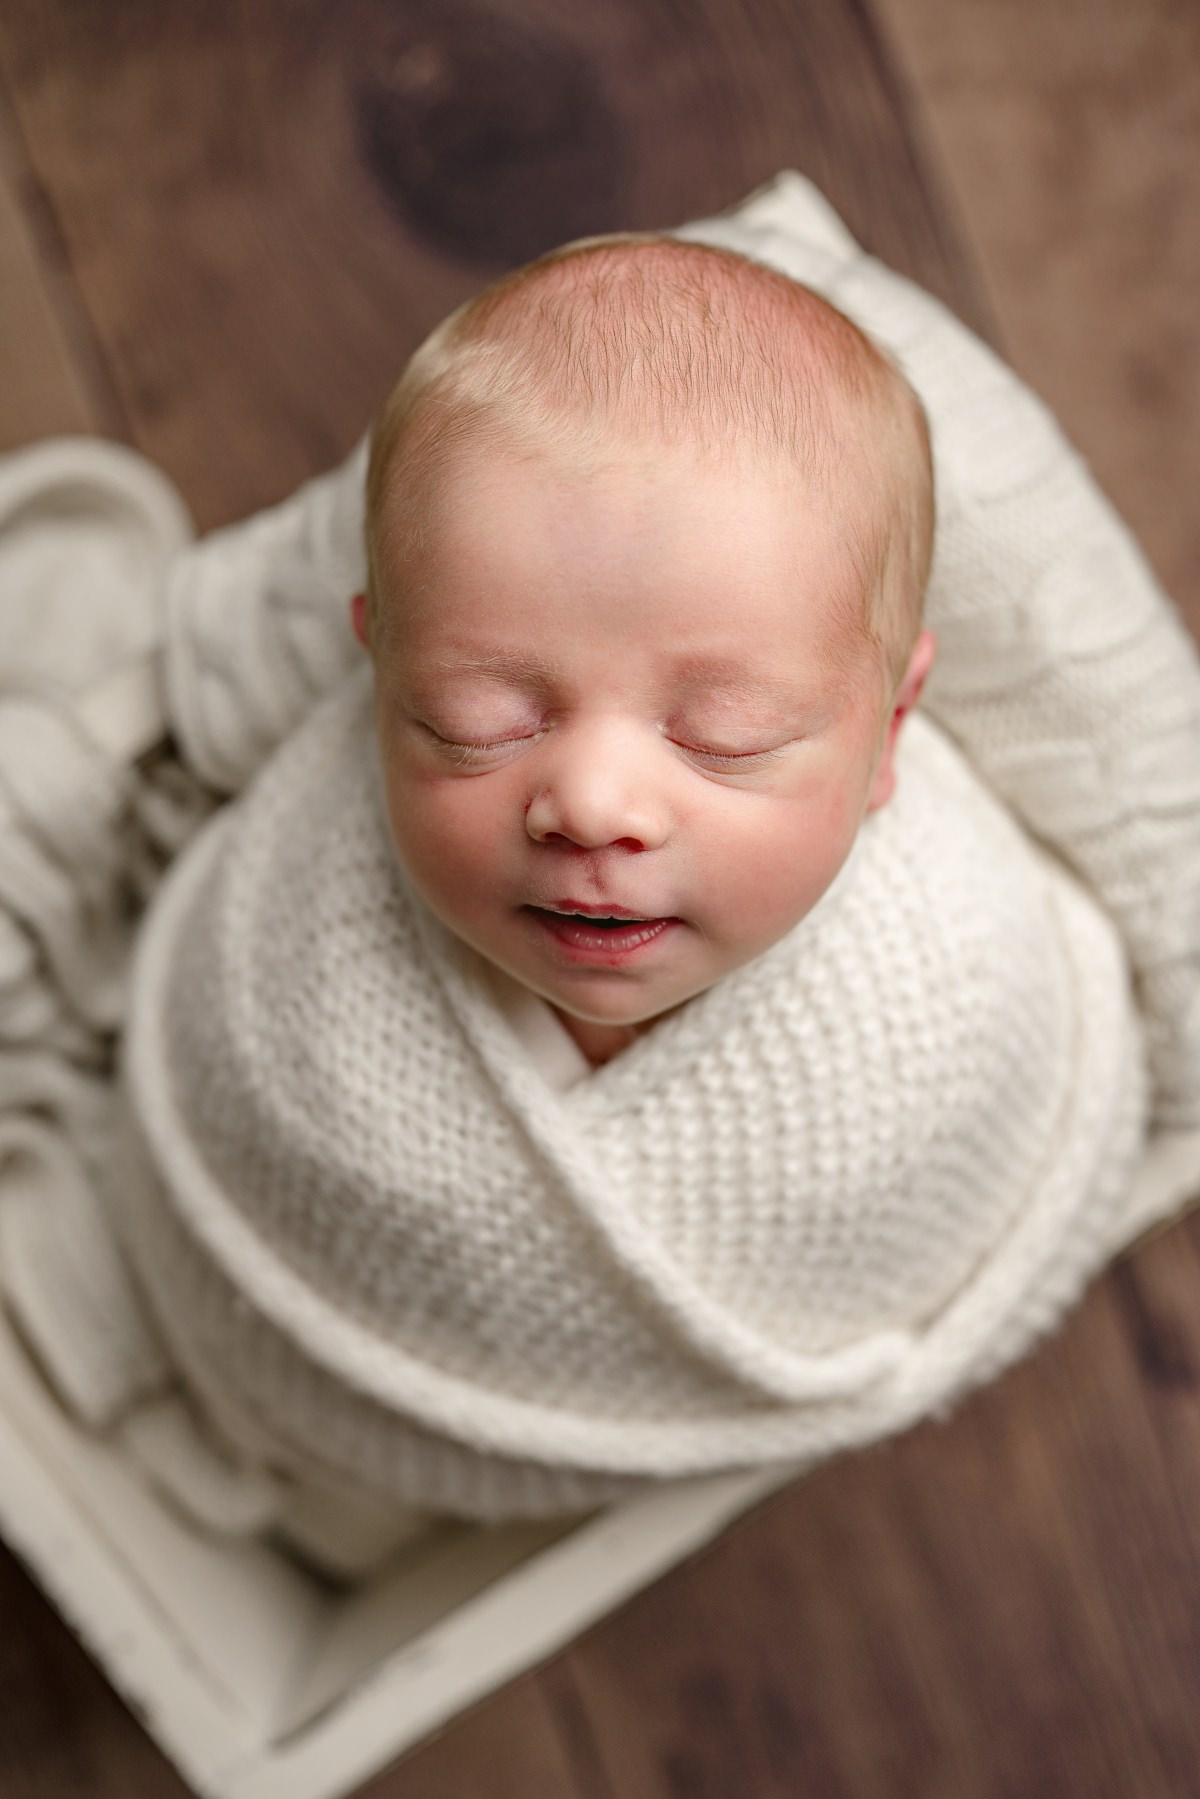 Is Newborn Photography Safe? | Cameron